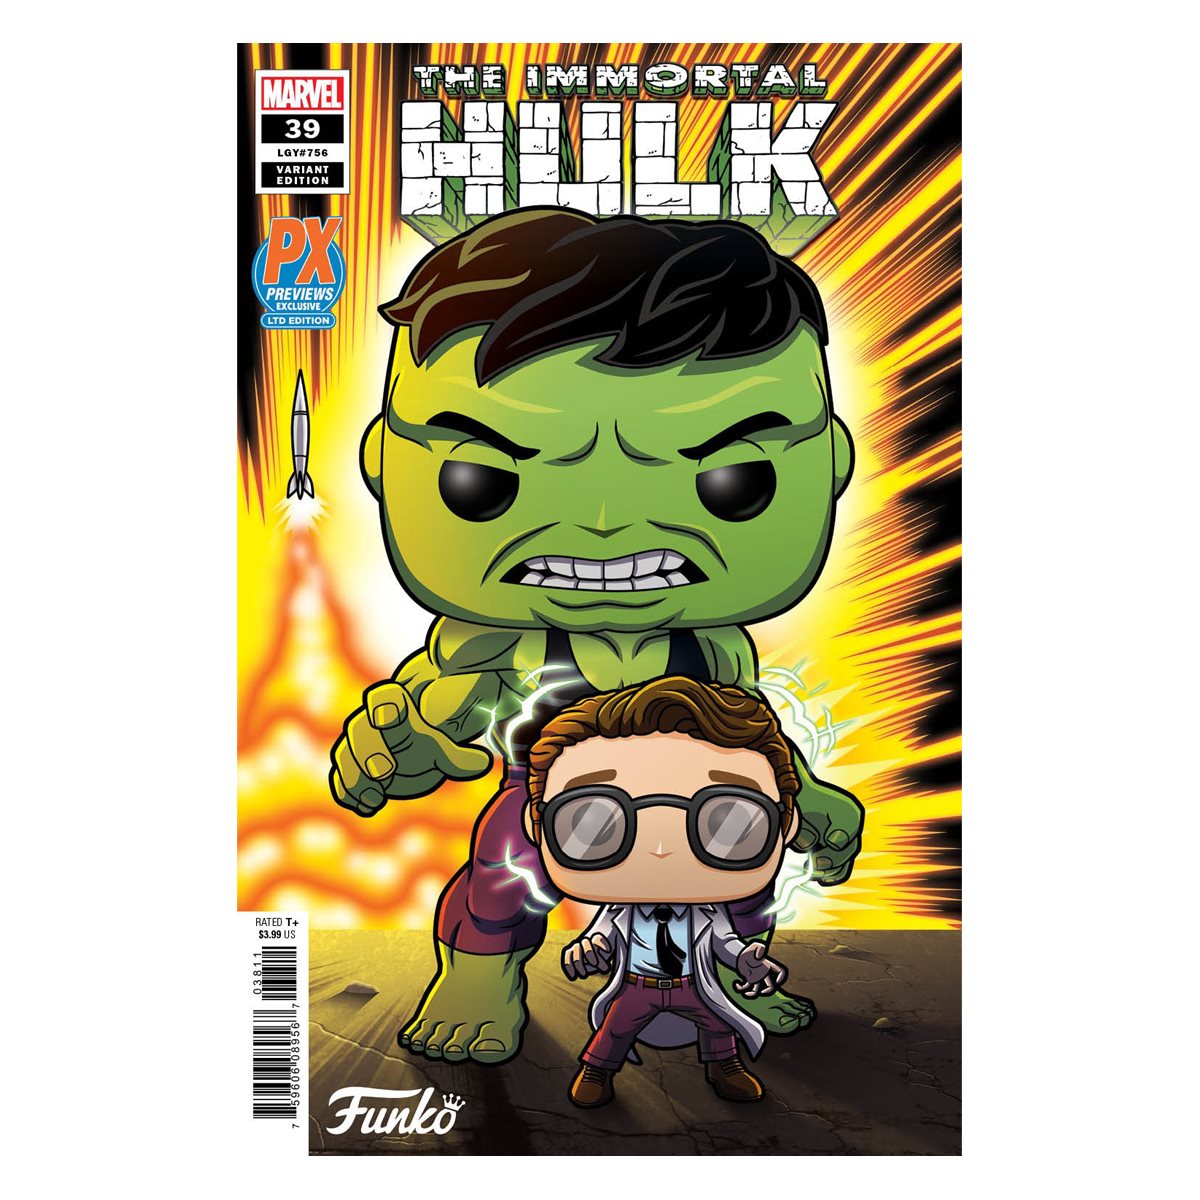 Funko Pop! Super Marvel Heroes Immortal Hulk 6-Inch PX Exclusive